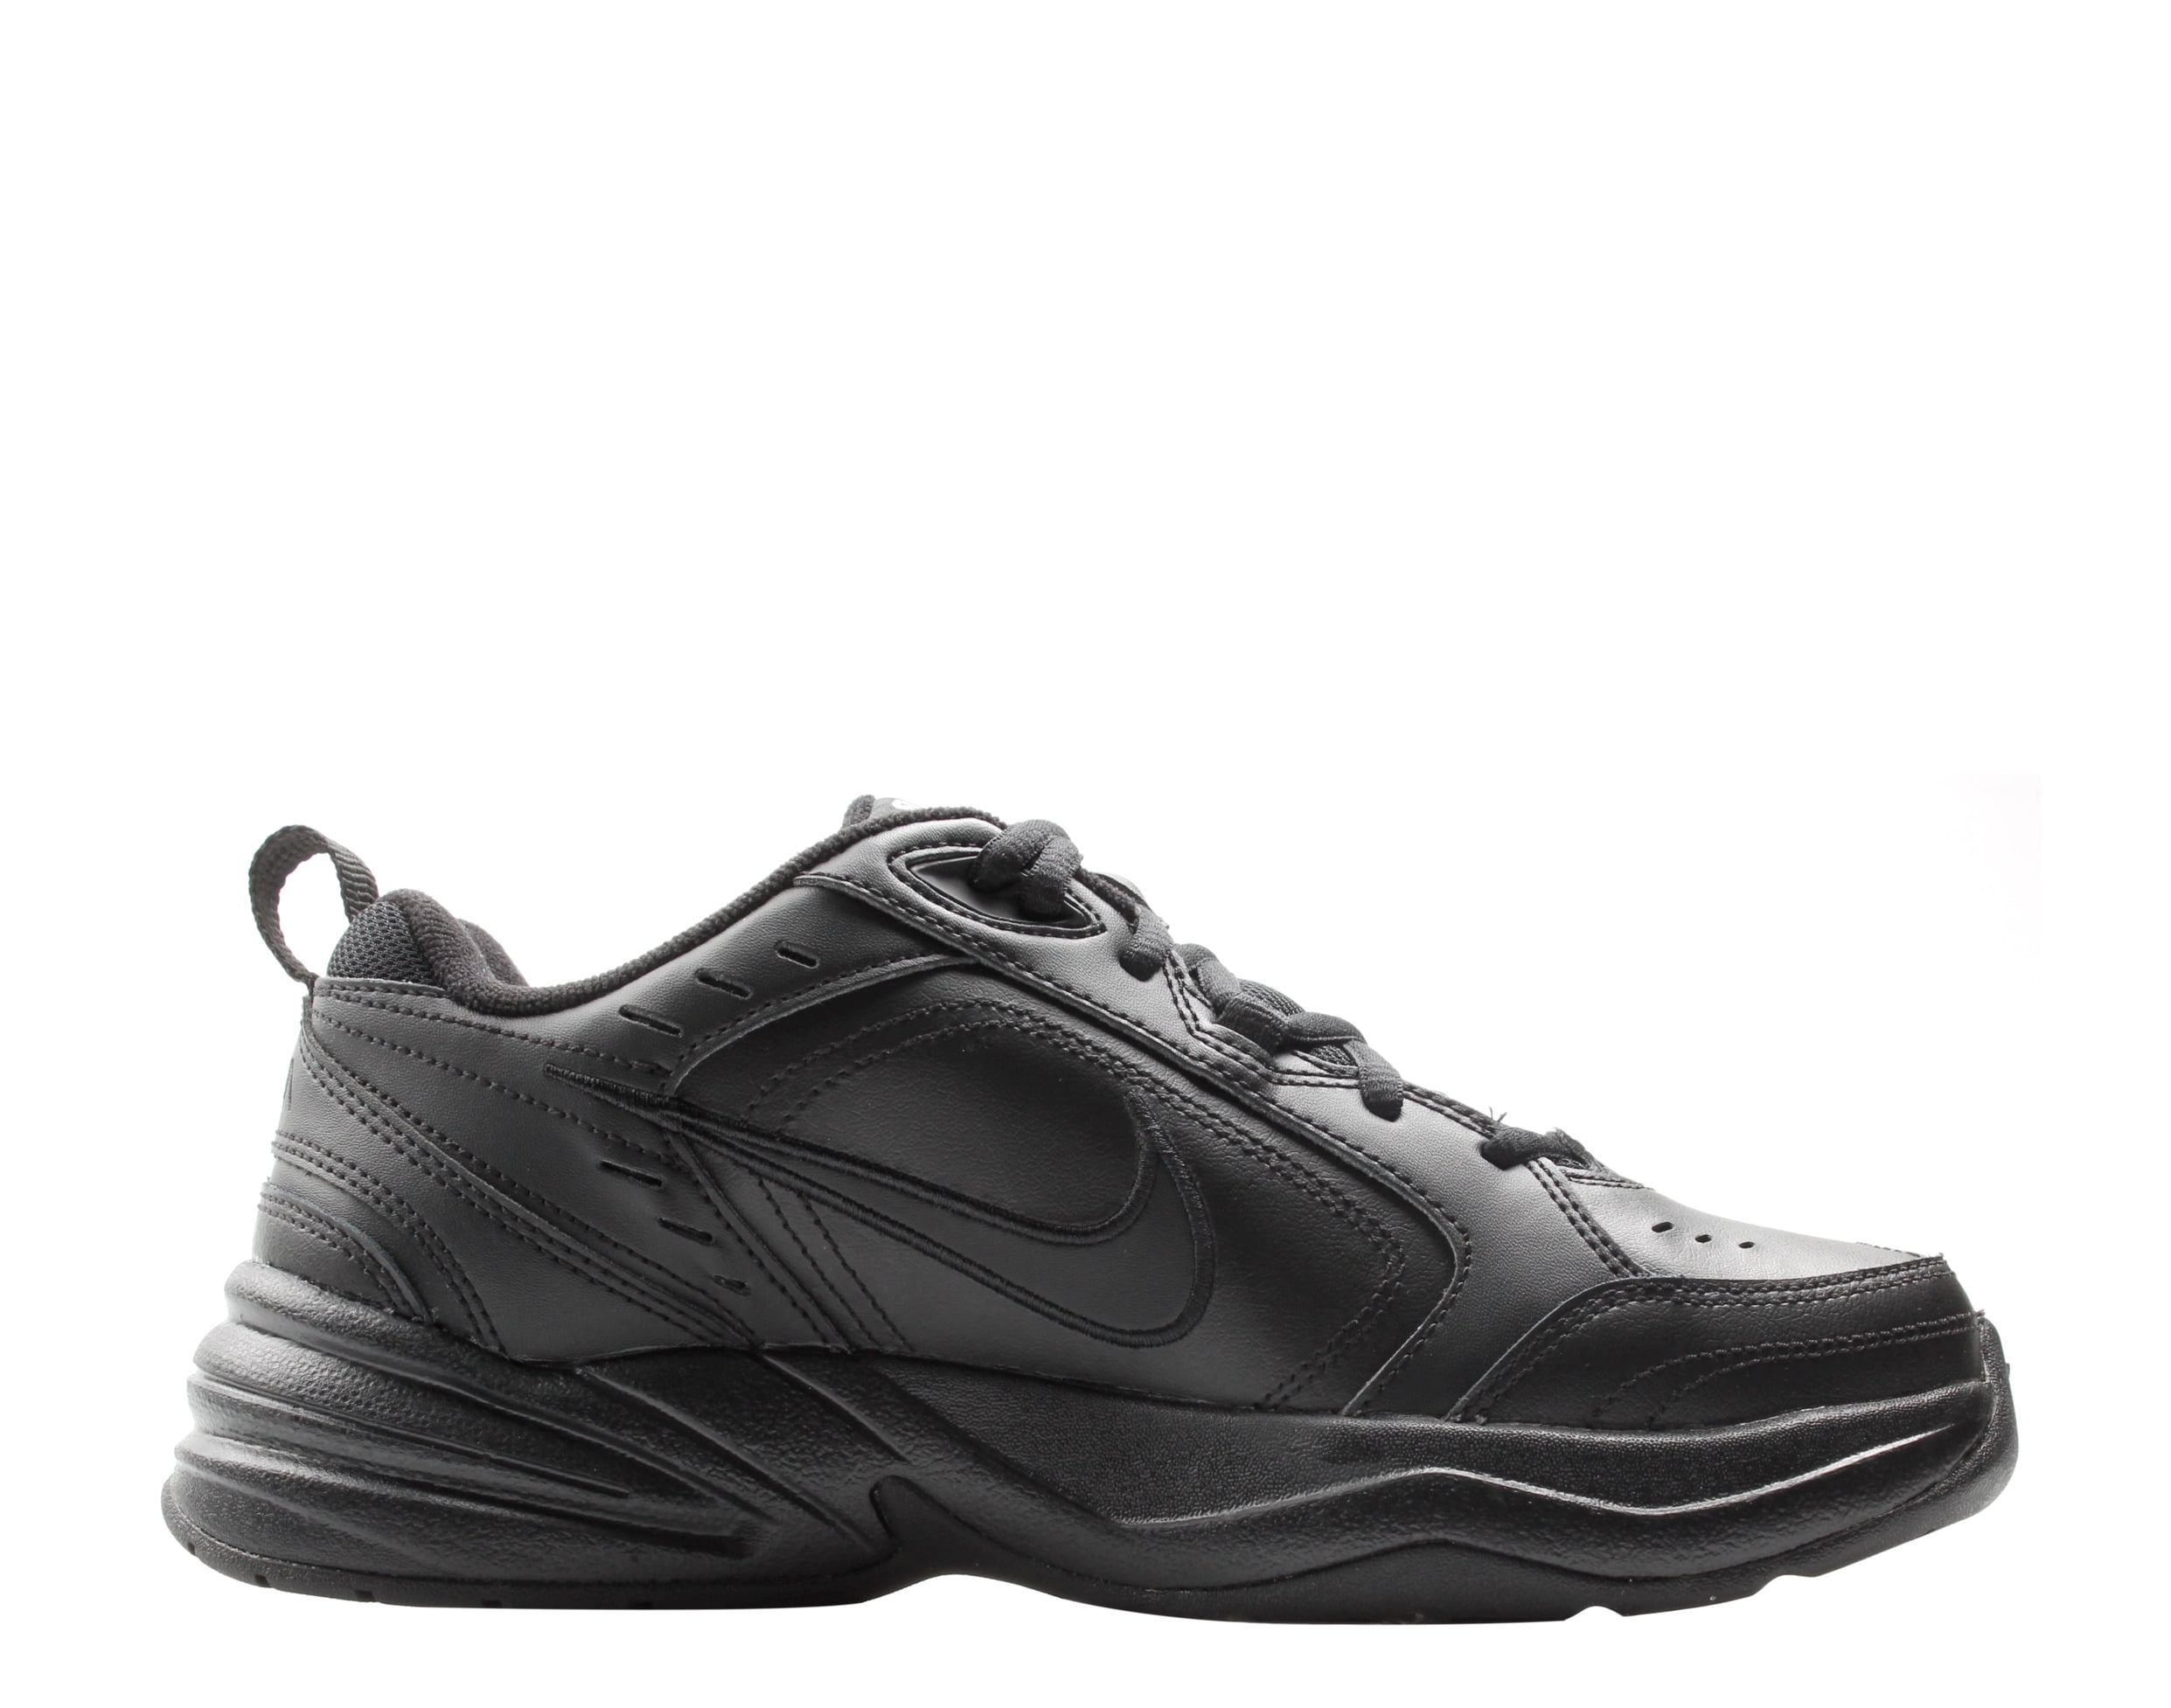 Nike Men's Air Monarch IV Shoe (Black/Black, 7.5 - Walmart.com